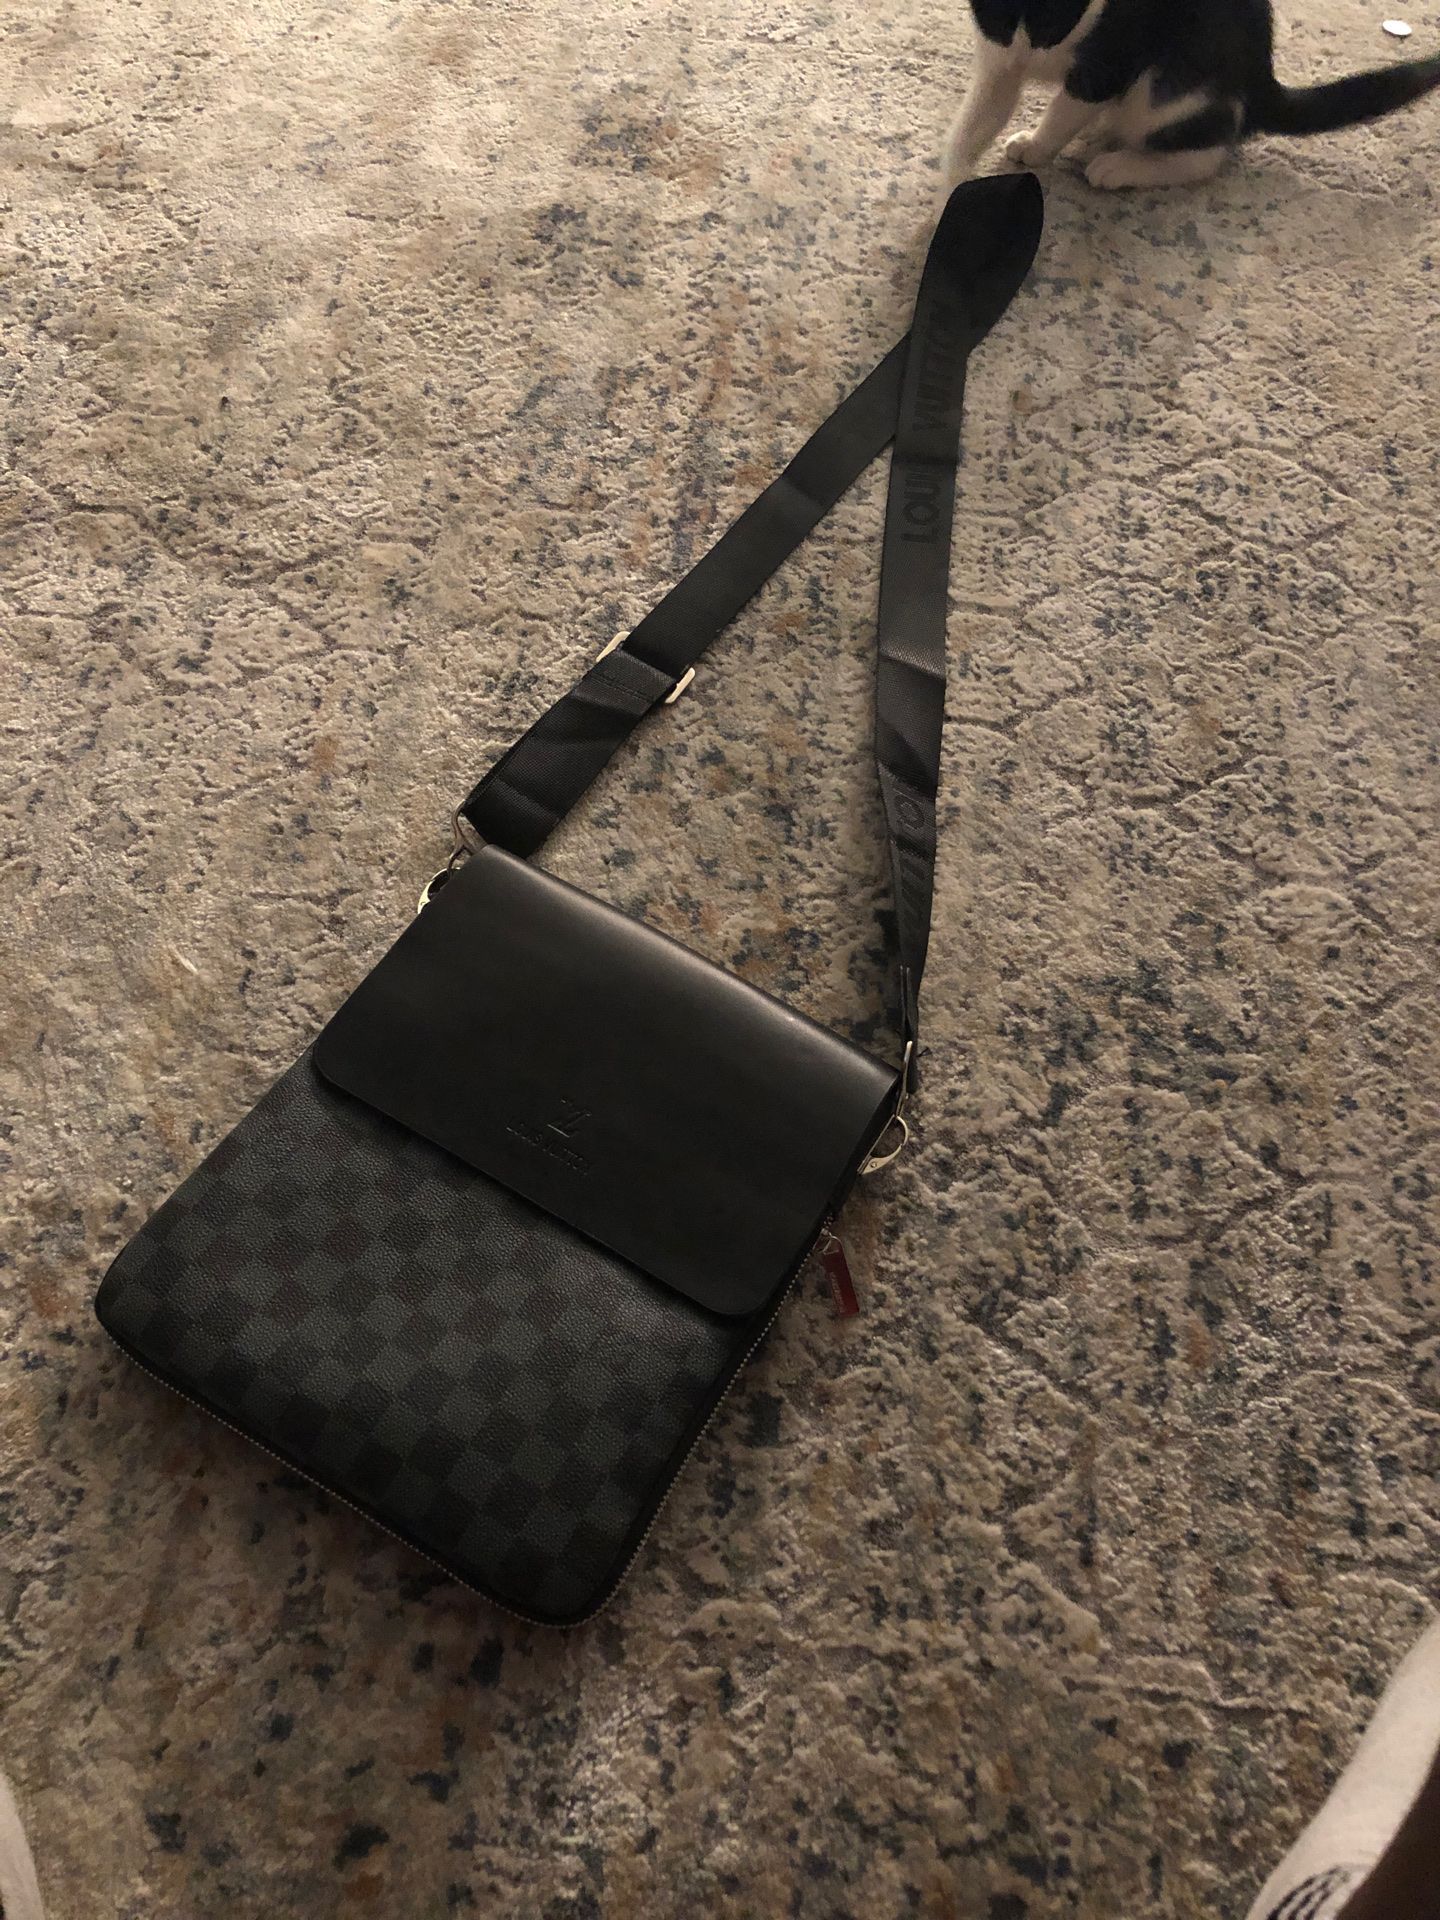 Louis Vuitton cross bag